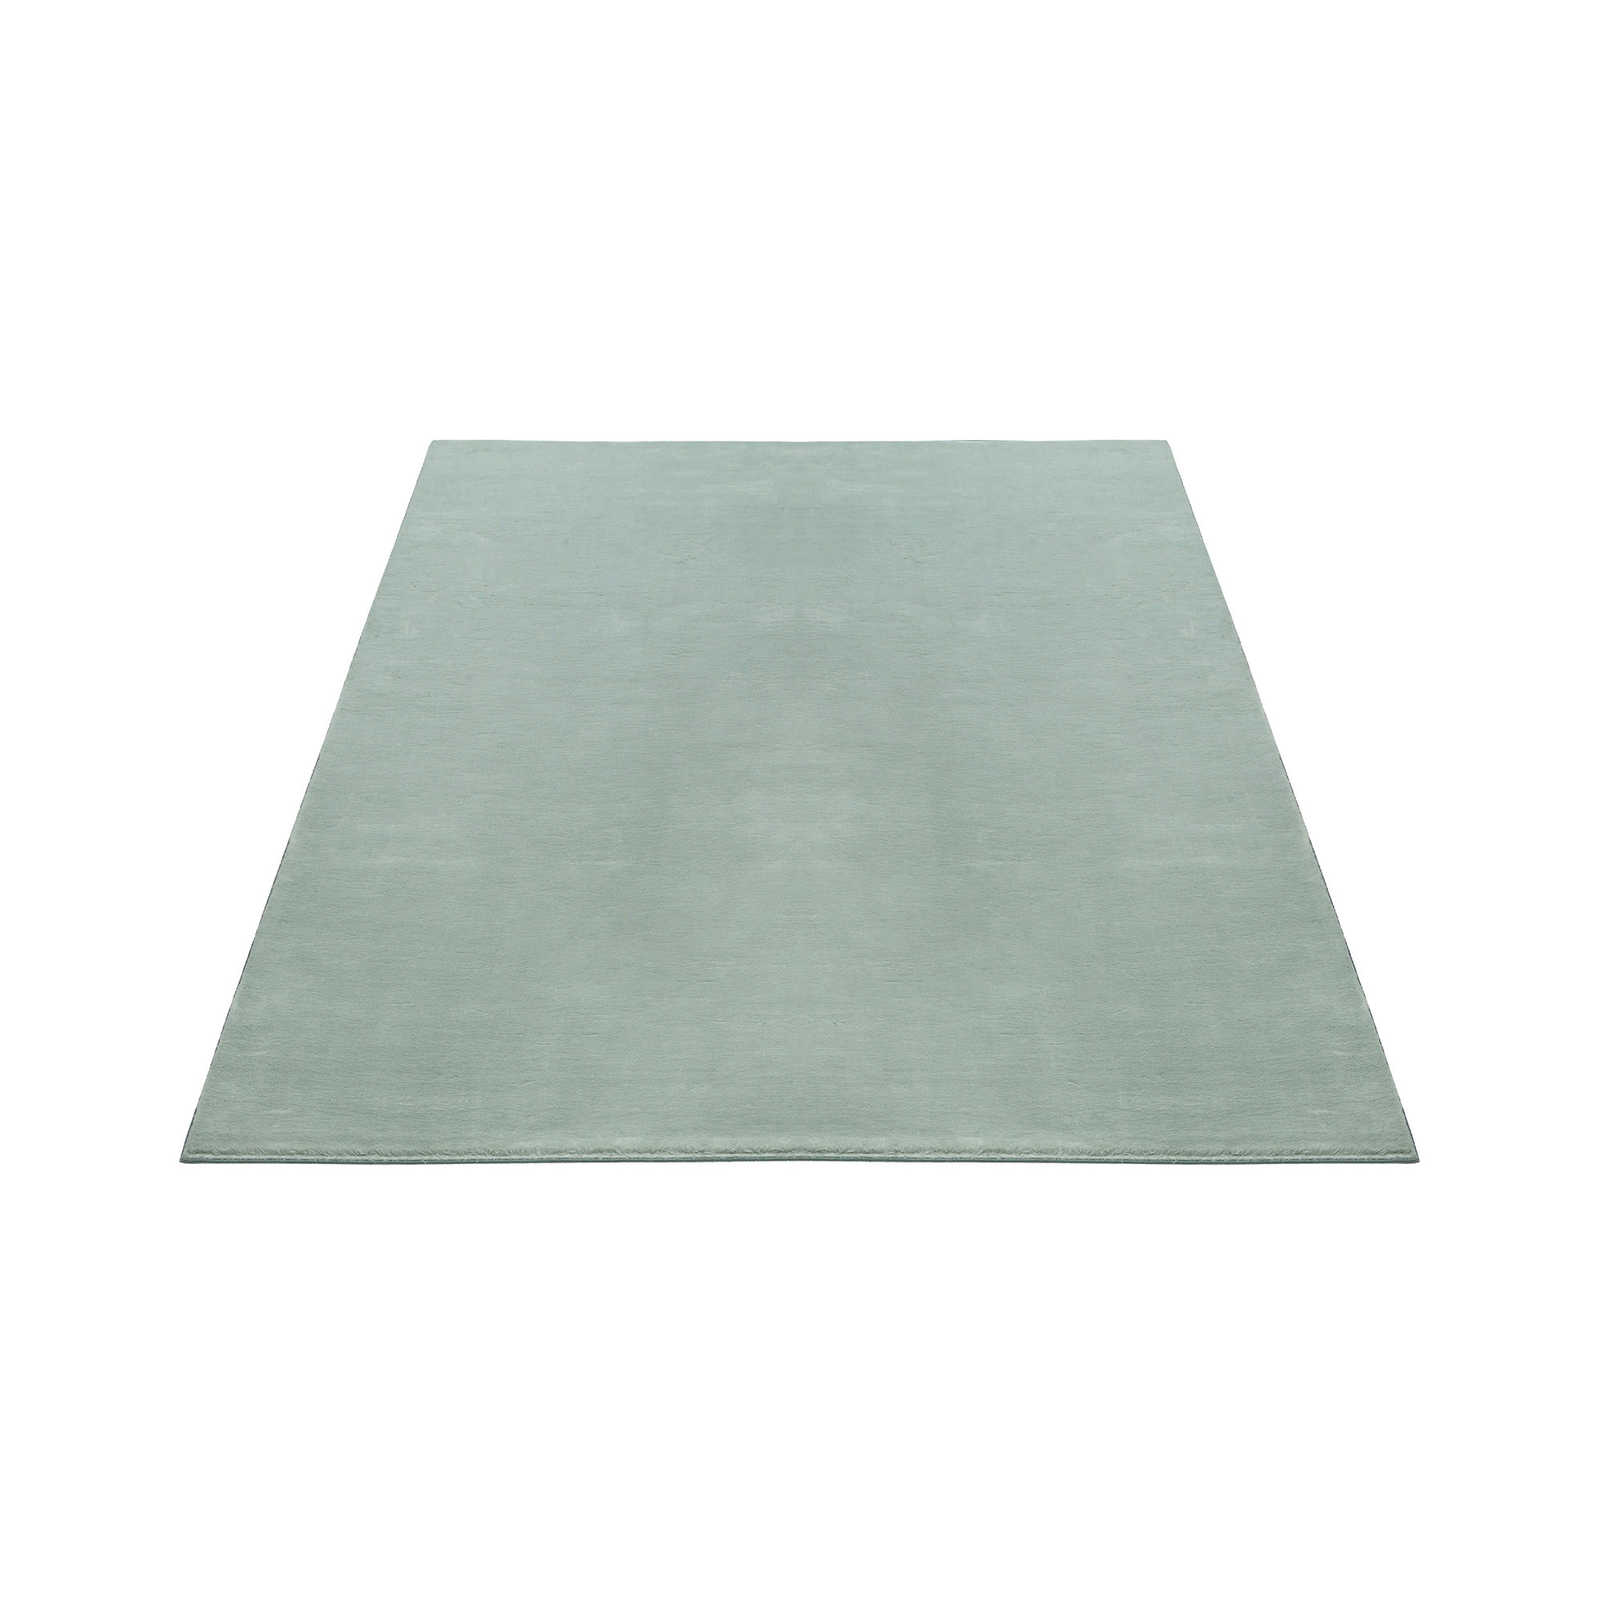 Soft high pile carpet in soft green - 230 x 160 cm
